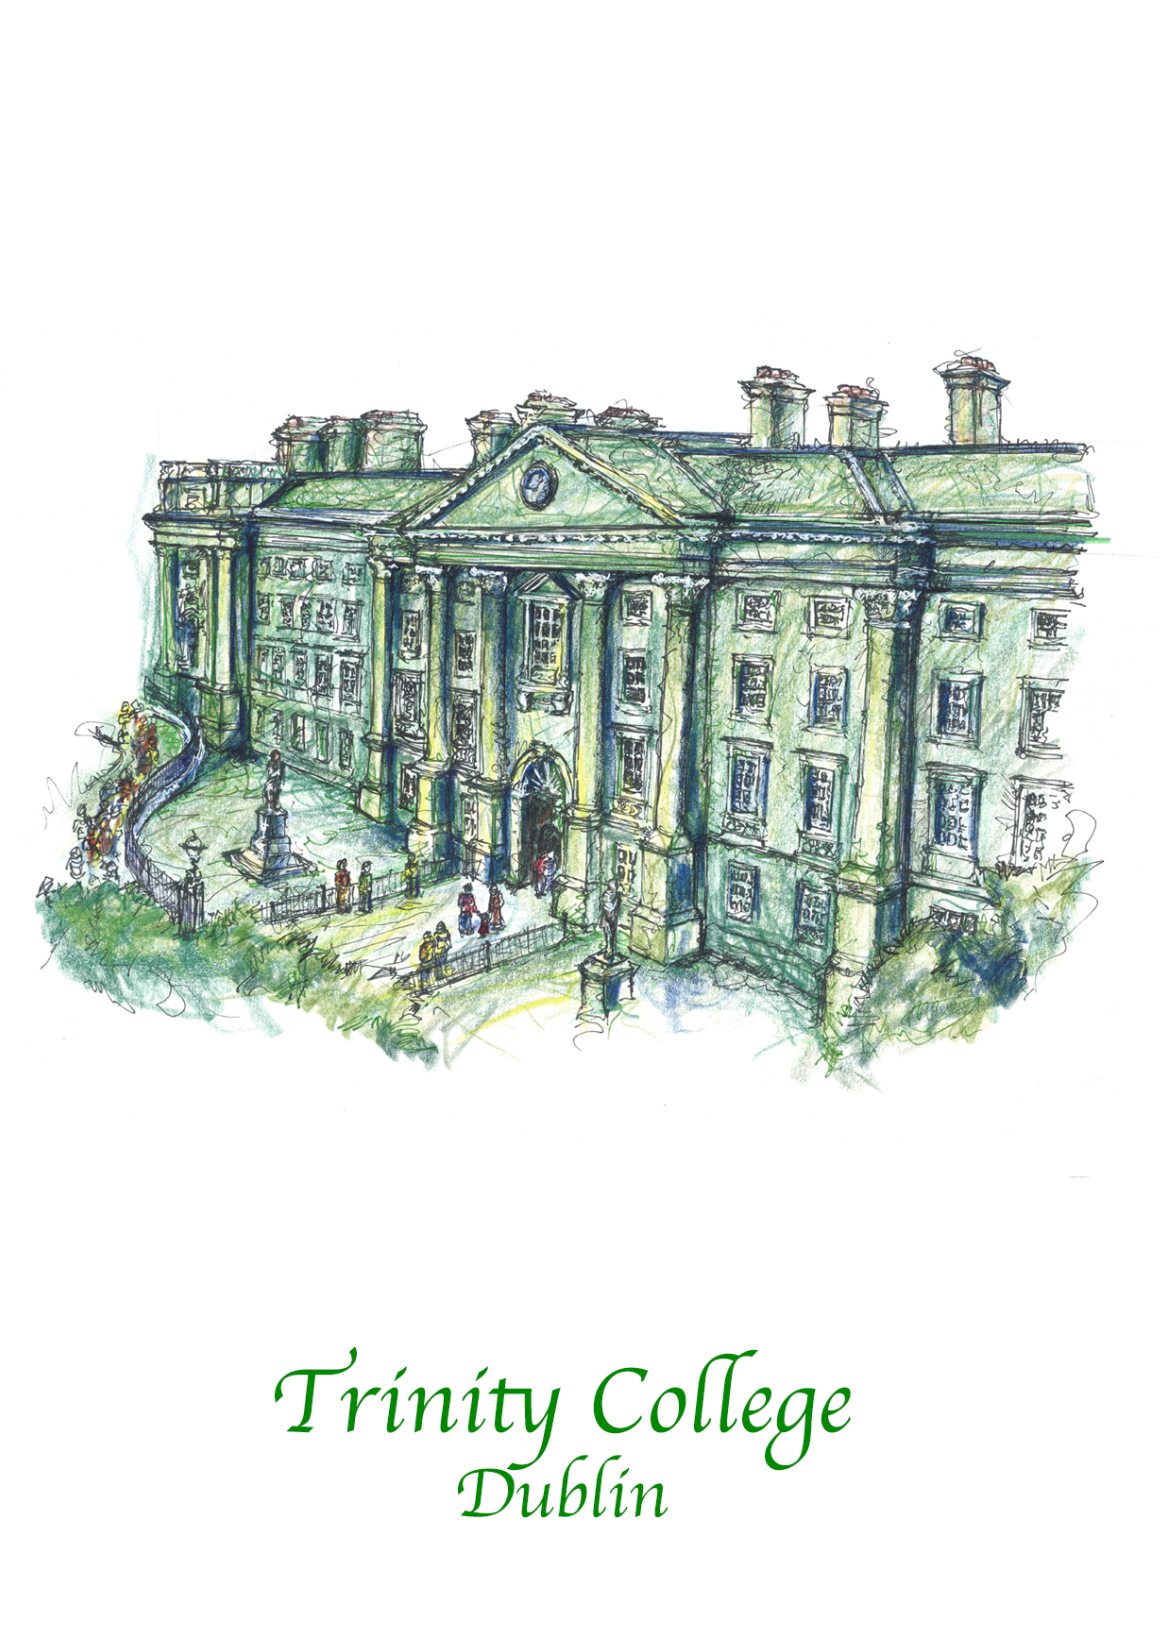 Book-of-Kells-Dublin-Heany-Trinity-College